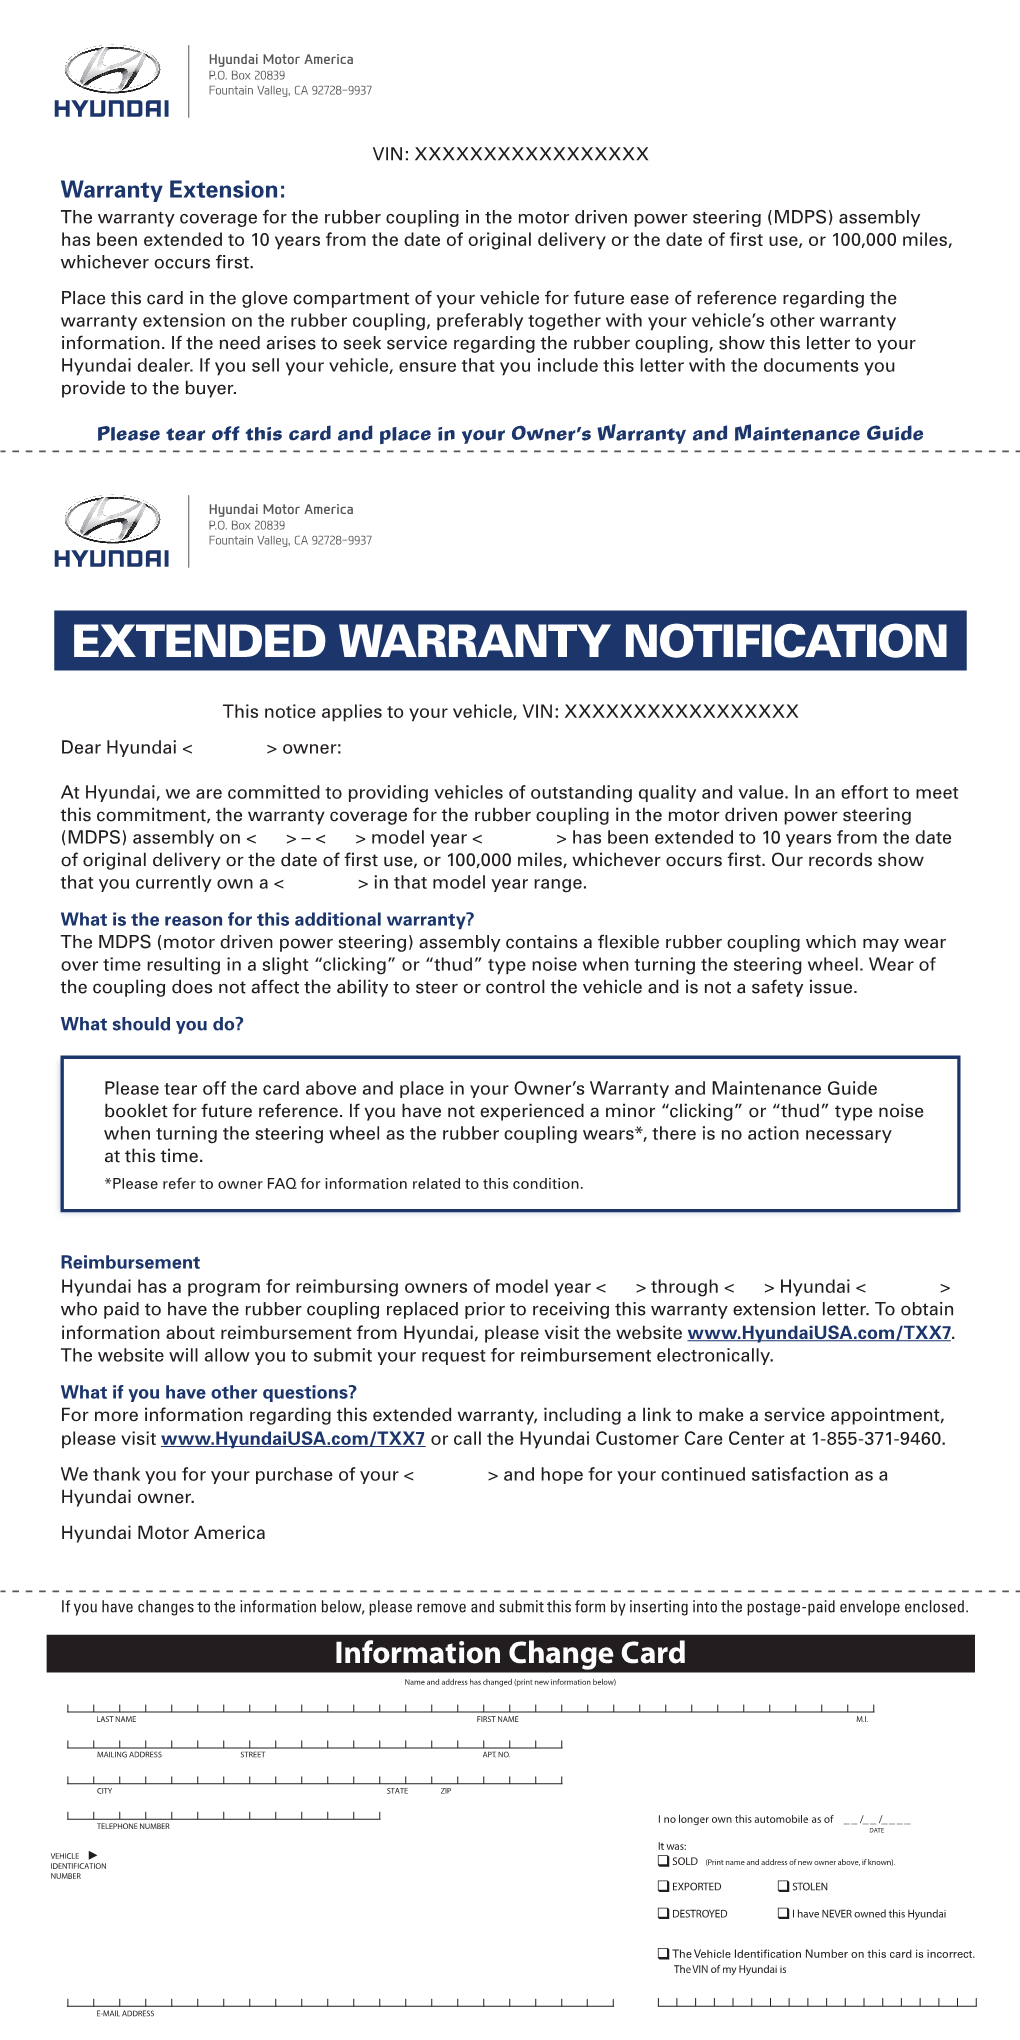 Extended Warranty Notification